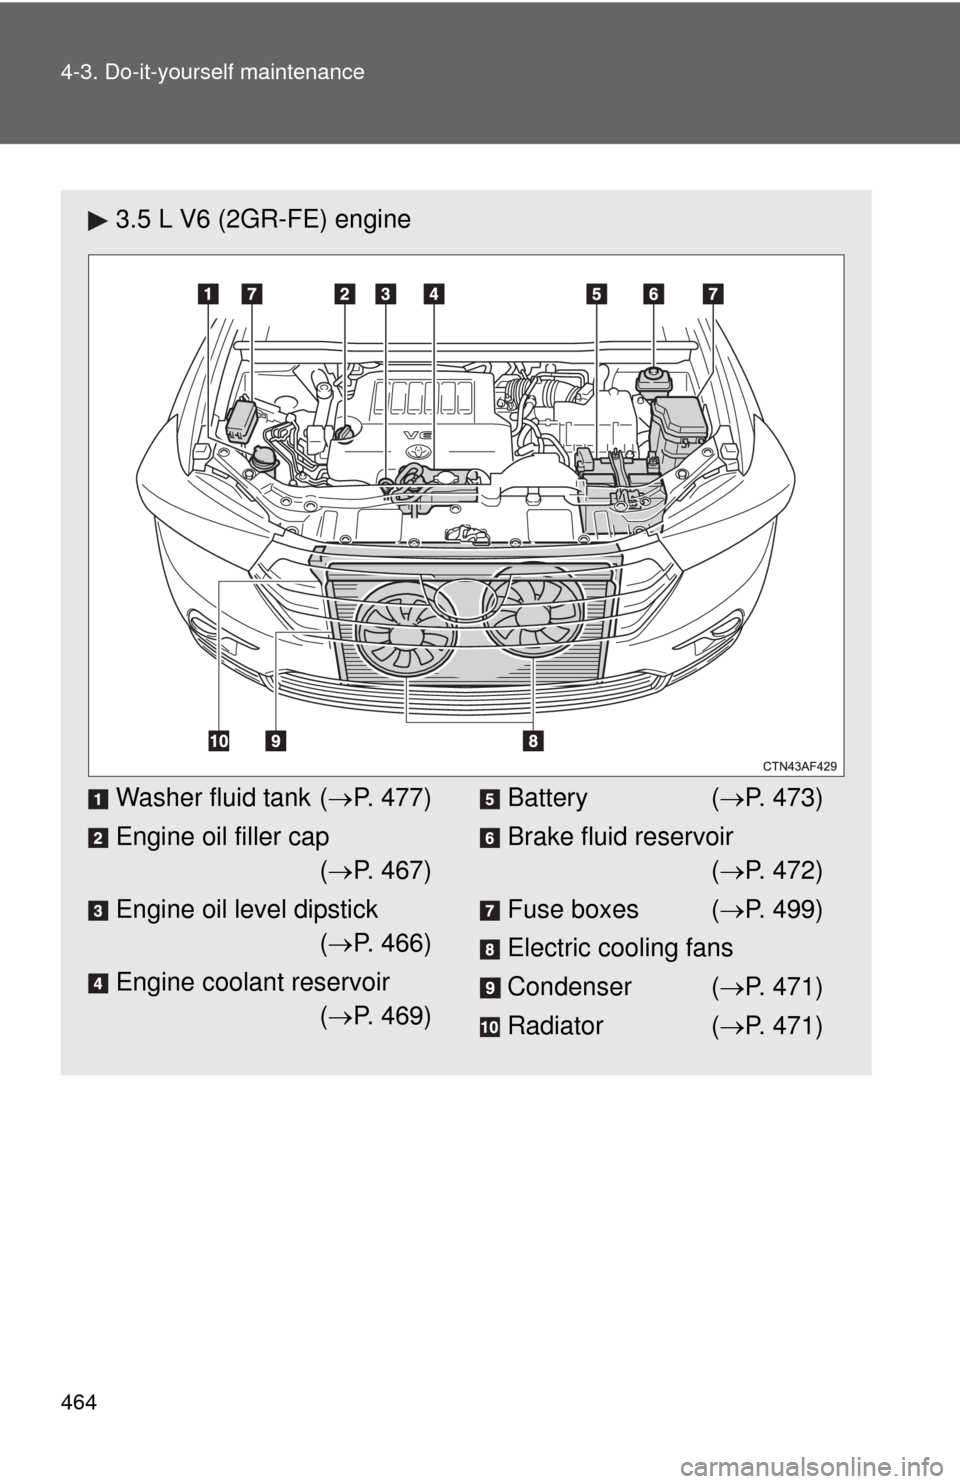 TOYOTA HIGHLANDER 2012 XU40 / 2.G Owners Manual 464 4-3. Do-it-yourself maintenance
3.5 L V6 (2GR-FE) engine
Washer fluid tank (P. 477)
Engine oil filler cap ( P. 467)
Engine oil level dipstick ( P. 466)
Engine coolant reservoir ( P. 46